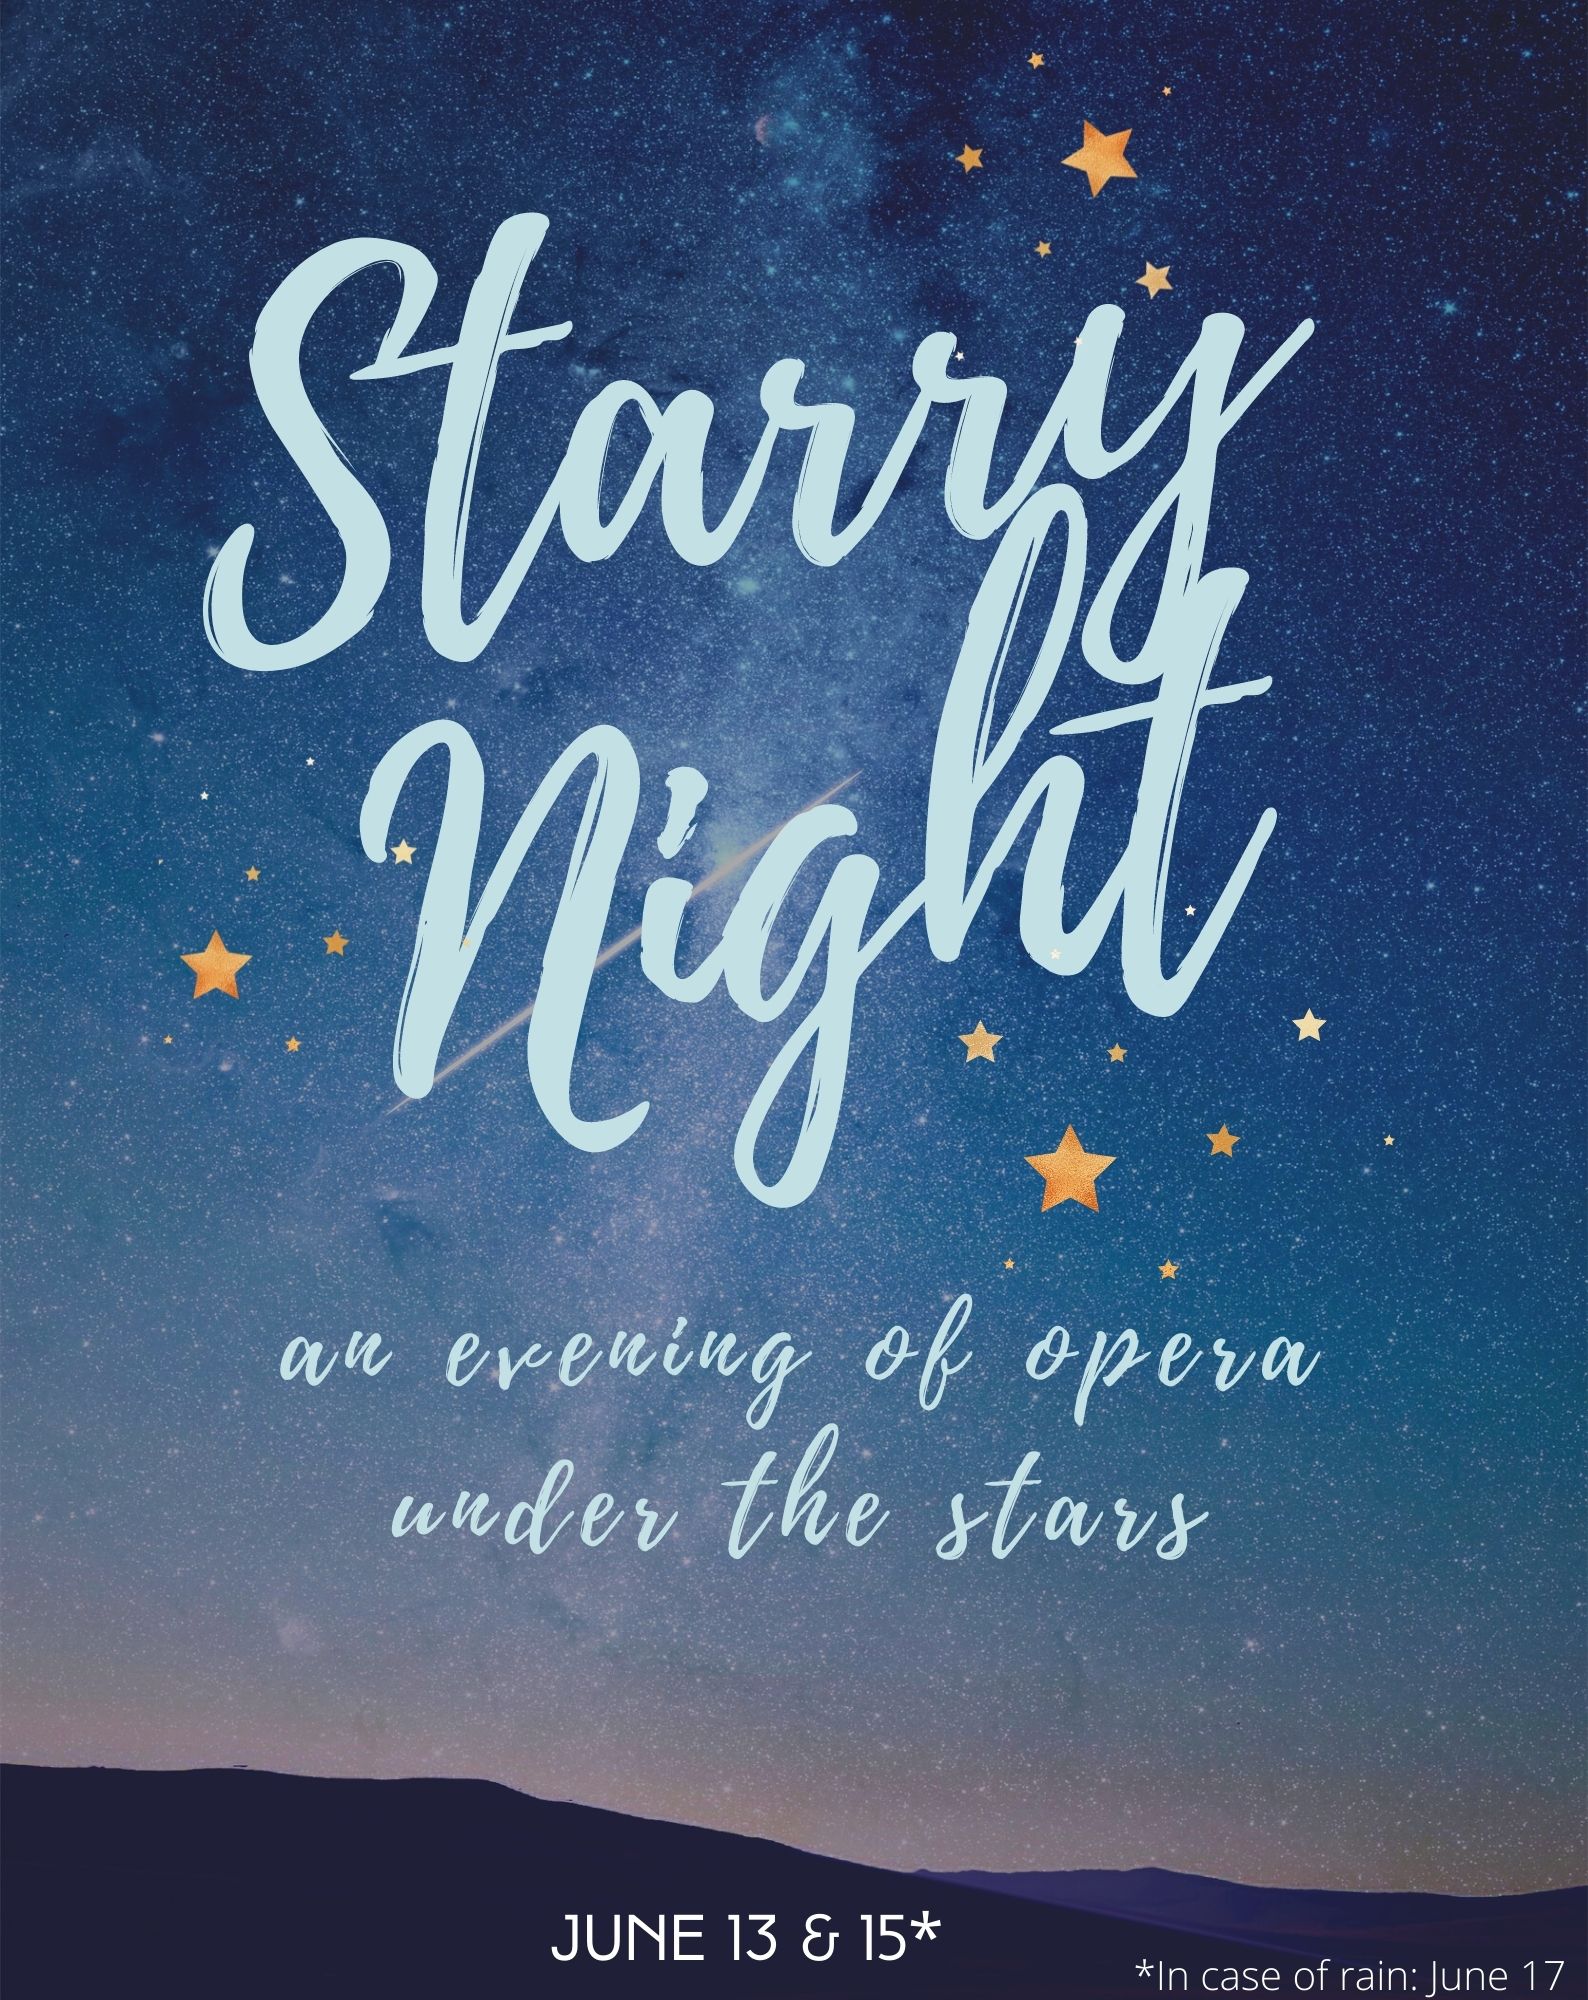 Starry Night, an evening of opera under the stars